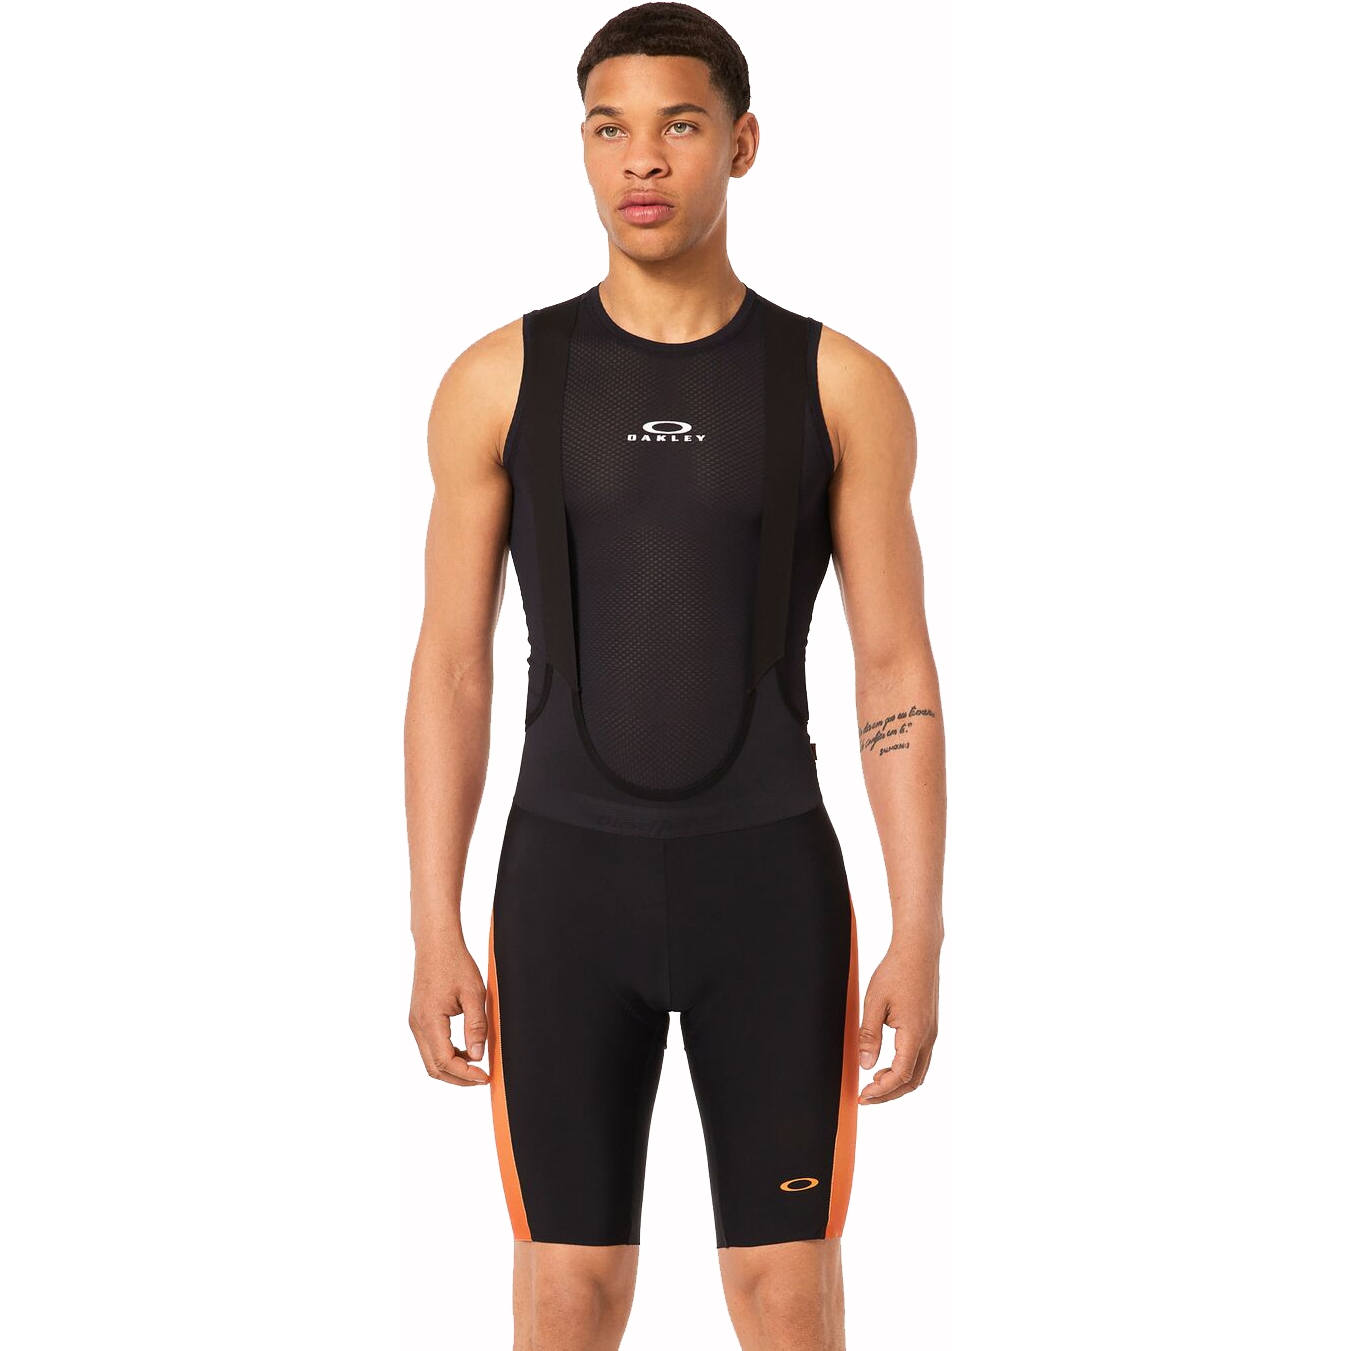 Picture of Oakley Endurance Ultra Bib Shorts Men - Black/Orange